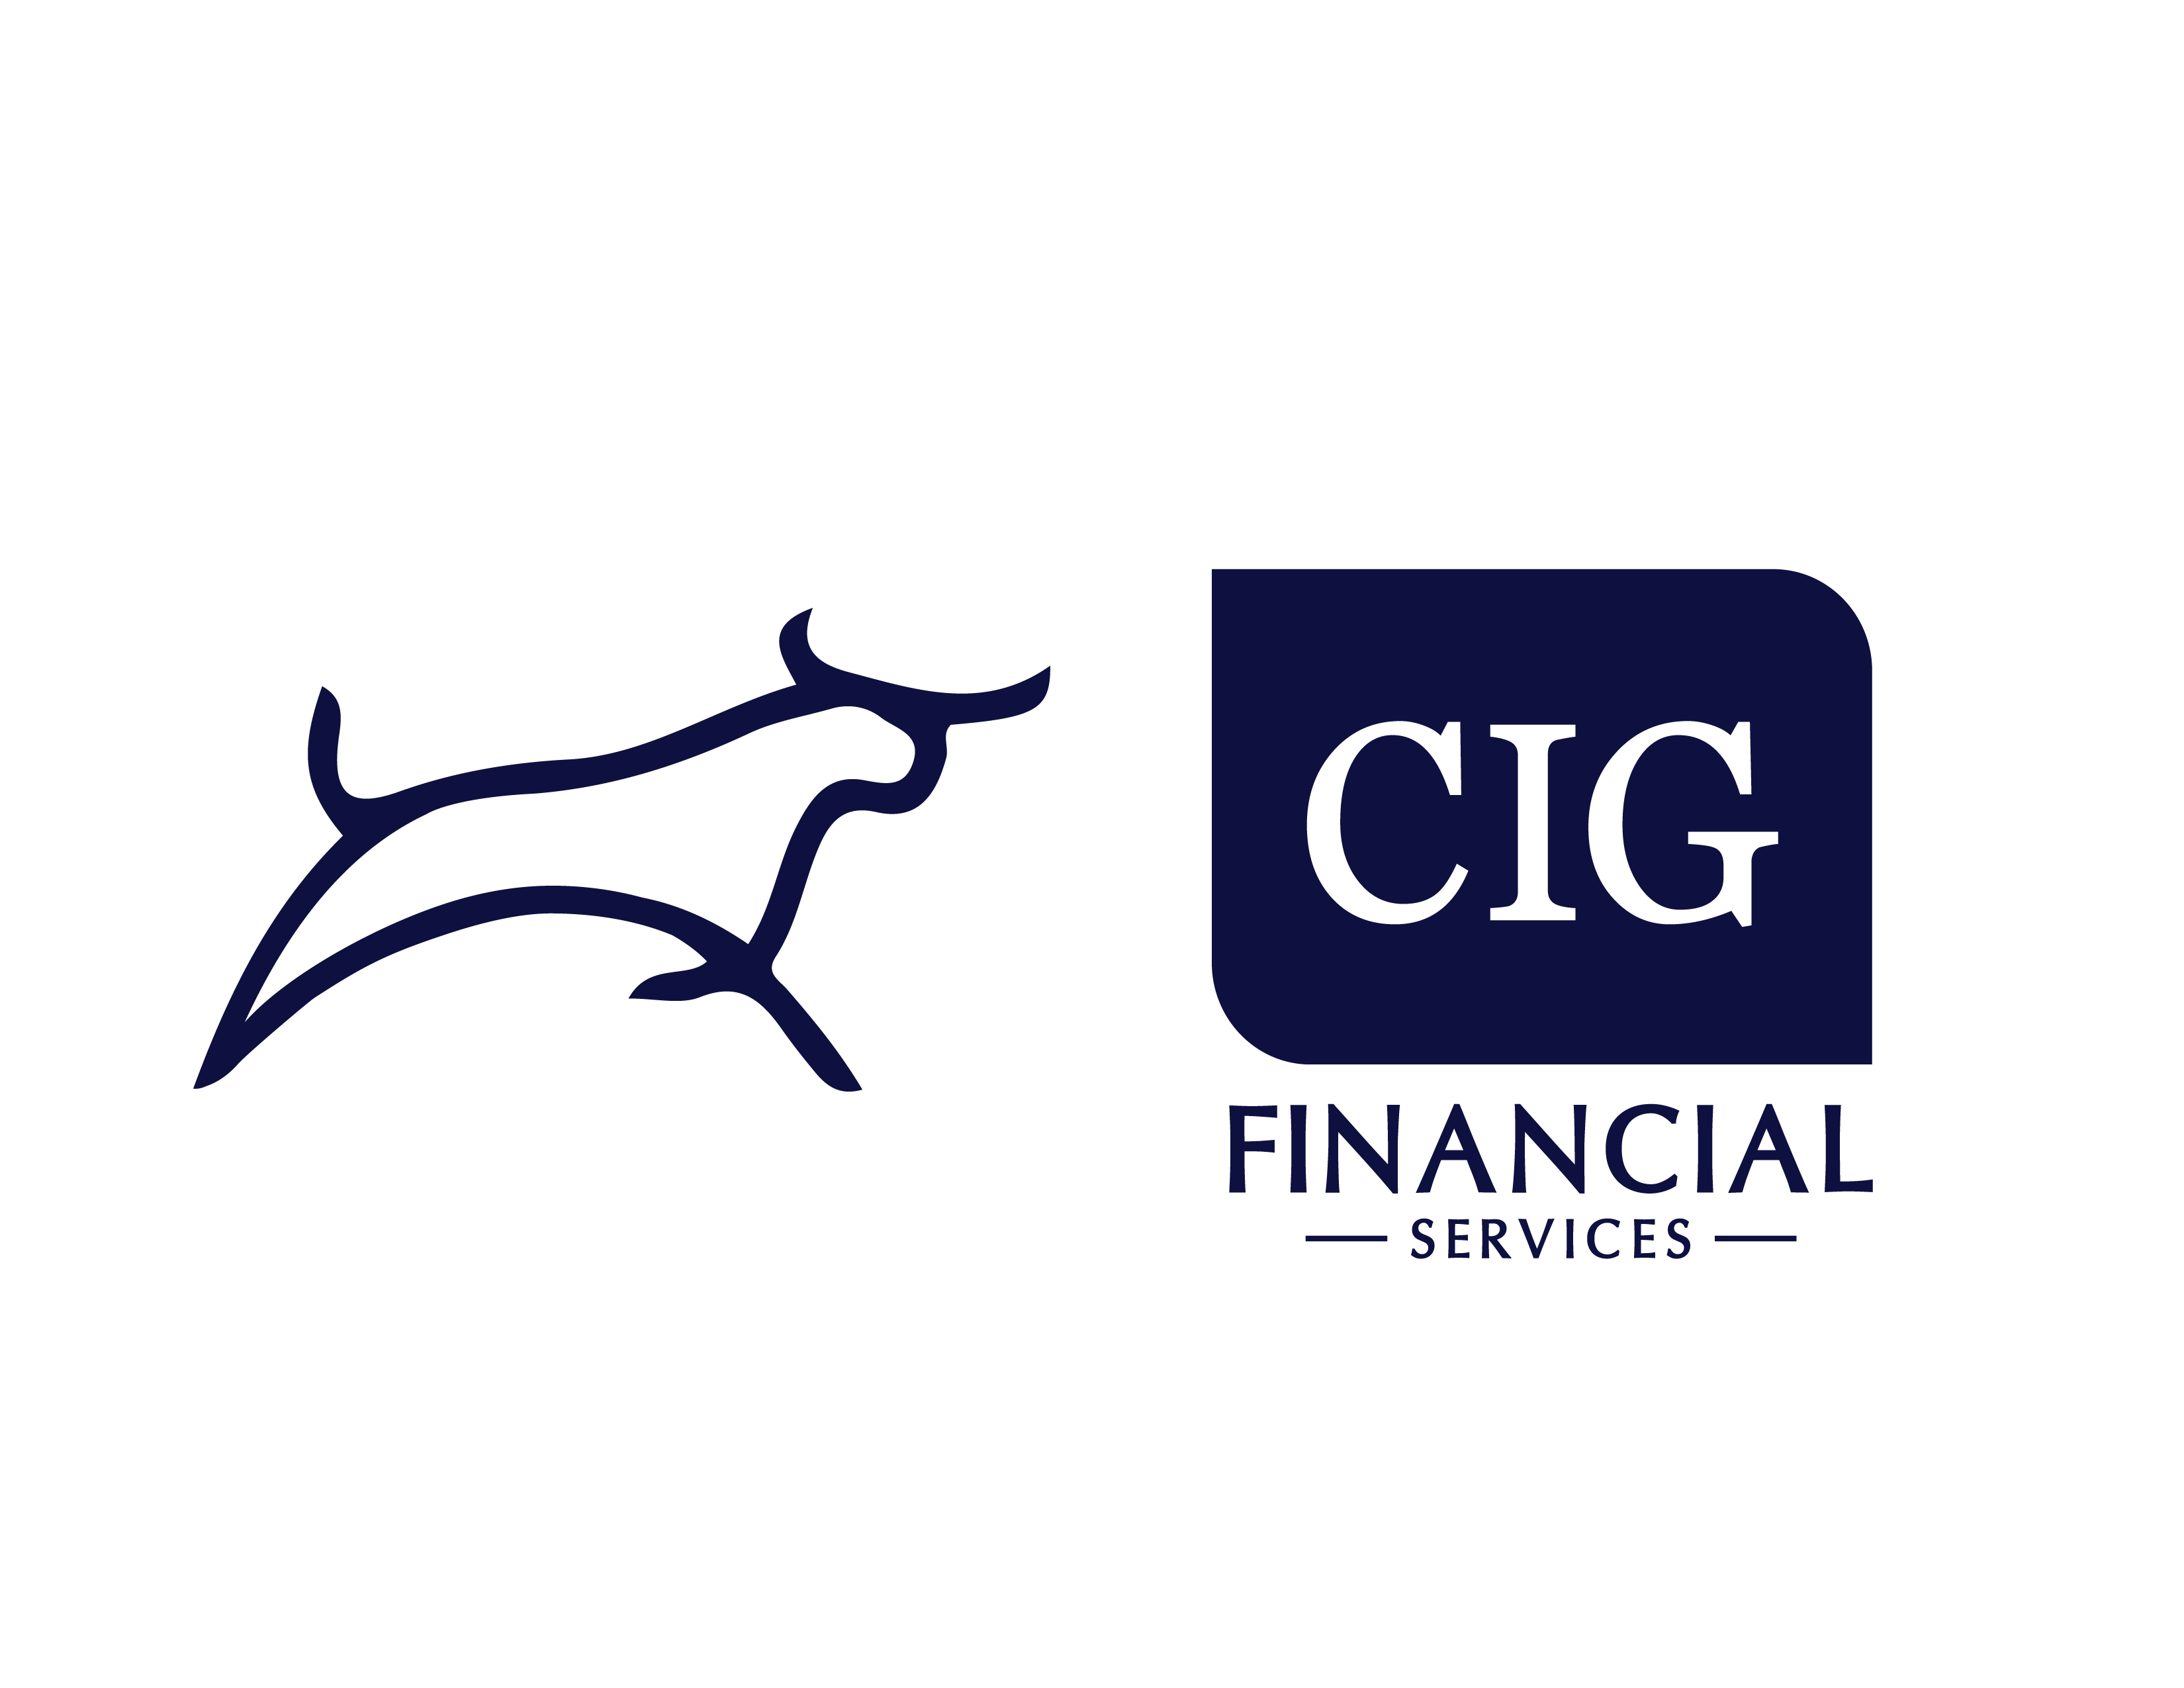 CIG Financial Services